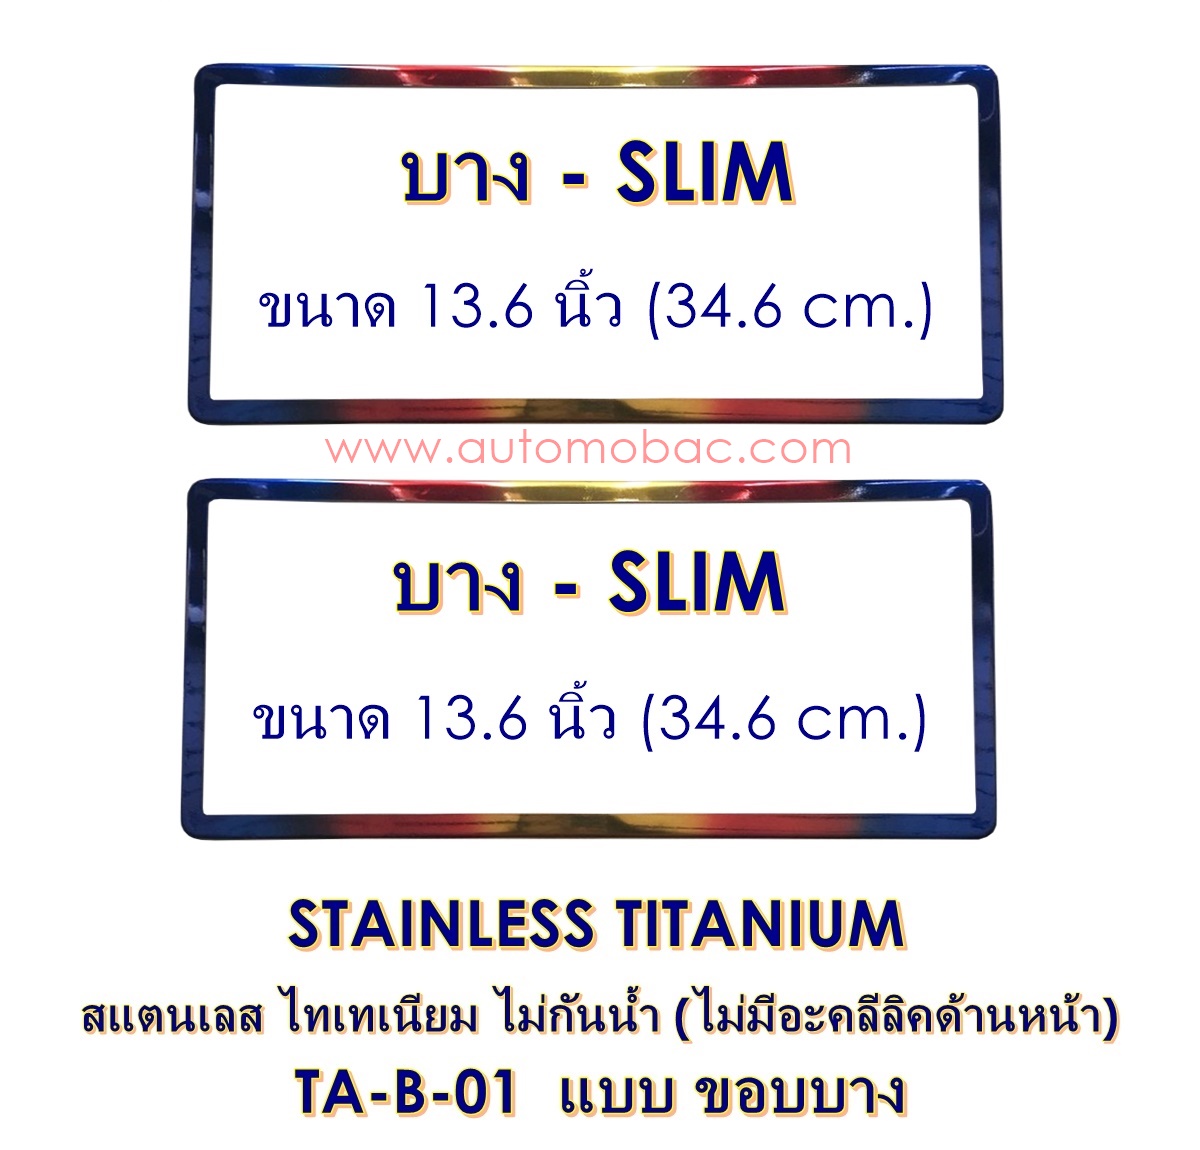 STAINLESS TITANIUM กรอบป้าย ไม่กันน้ำ TA-B-01 SLIM ขอบบาง 2 ชิ้น สแตนเลส ไทเทเนียม สวยไม่ซ้ำใคร